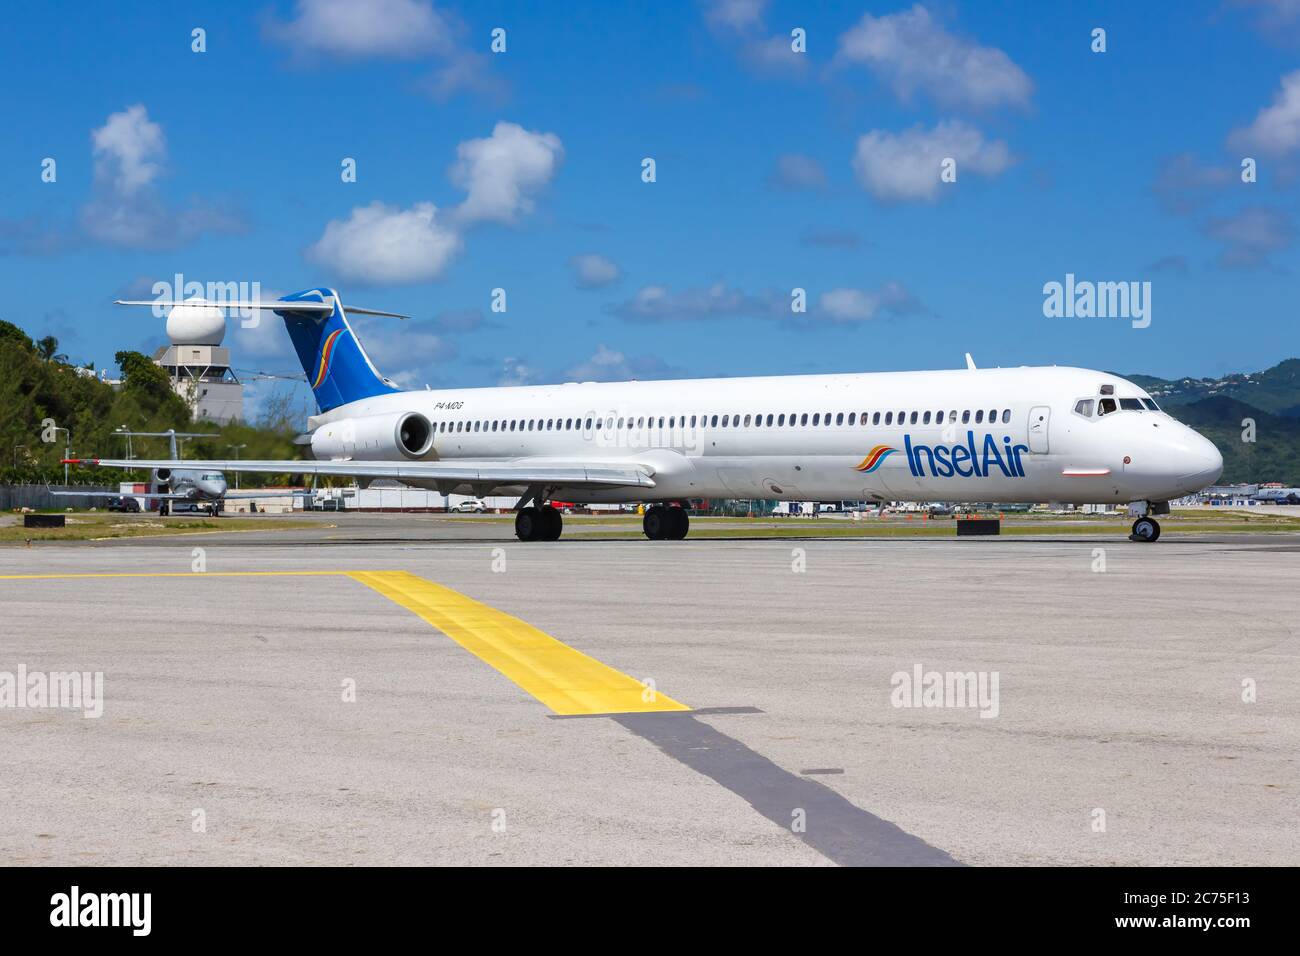 Sint Maarten - 16 settembre 2016: Aereo Insel Air McDonnell Douglas MD-83 all'aeroporto di Sint Maarten (SXM) nei Caraibi. Foto Stock